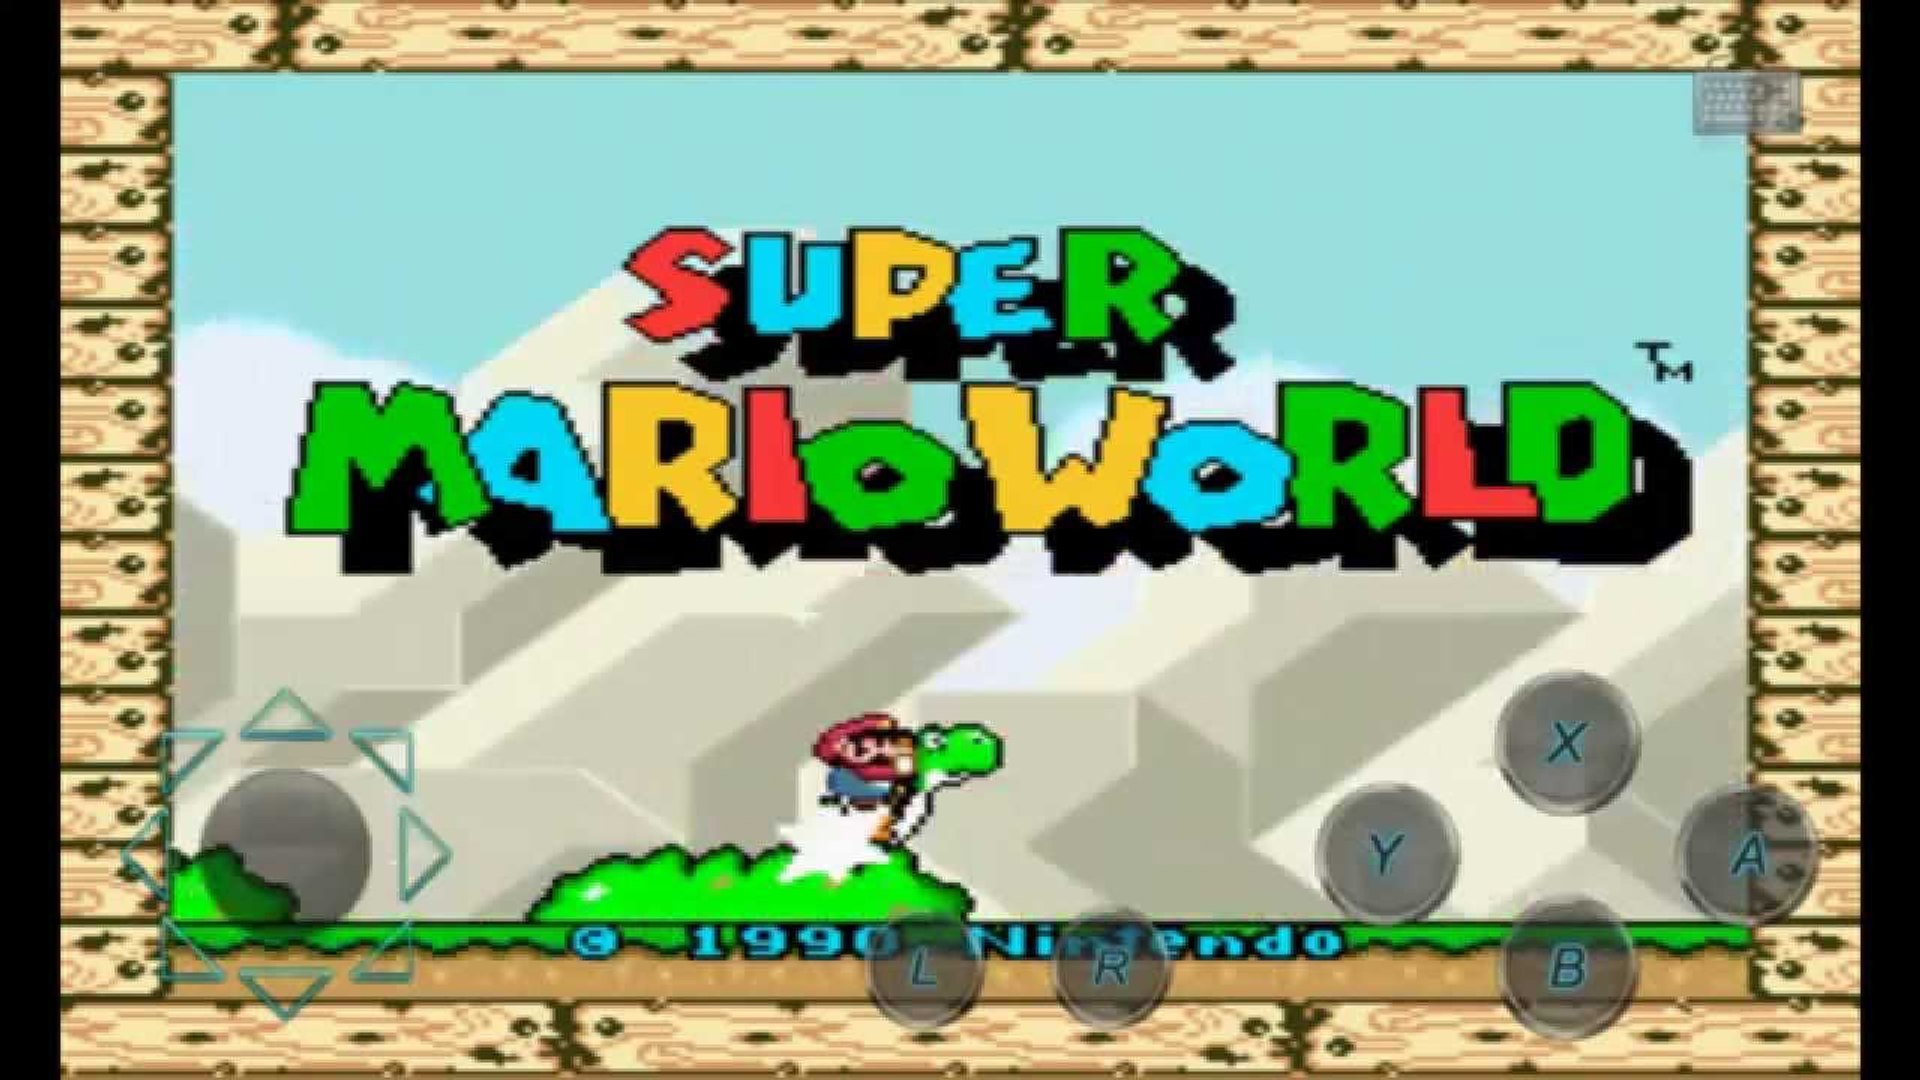 Como baixar o Super Mario World pro Android (sem emulador) - Super Mario  World Apk - Vídeo Dailymotion